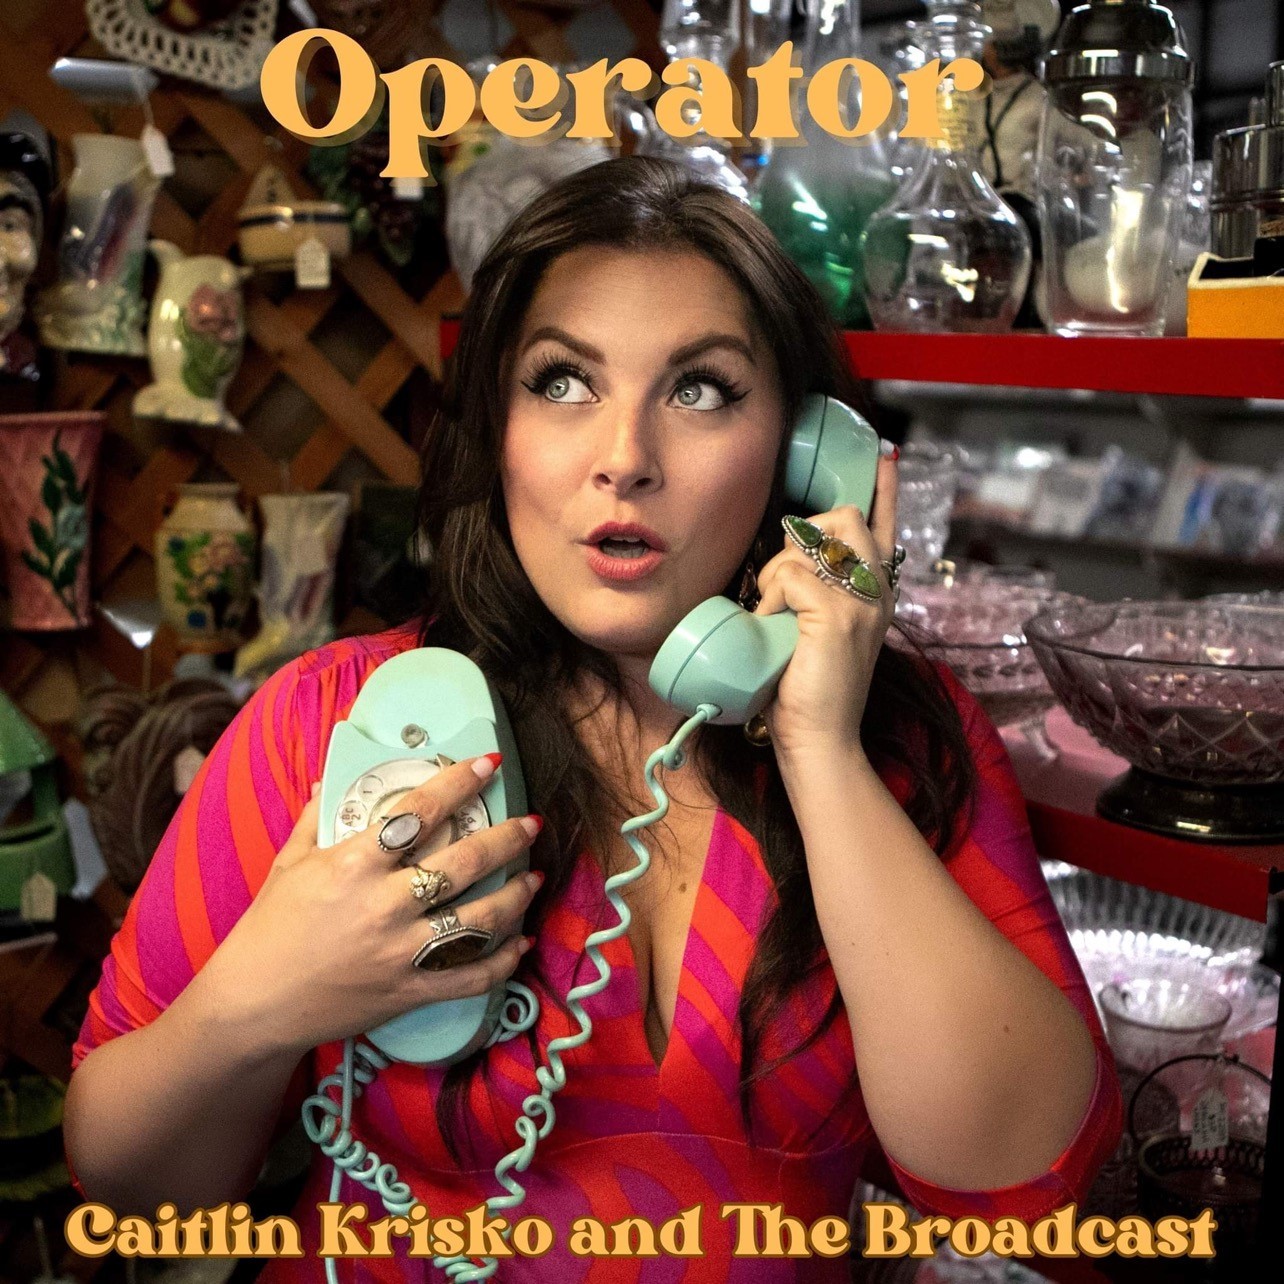 Caitlin Krisko and the Broadcast - Operatorg